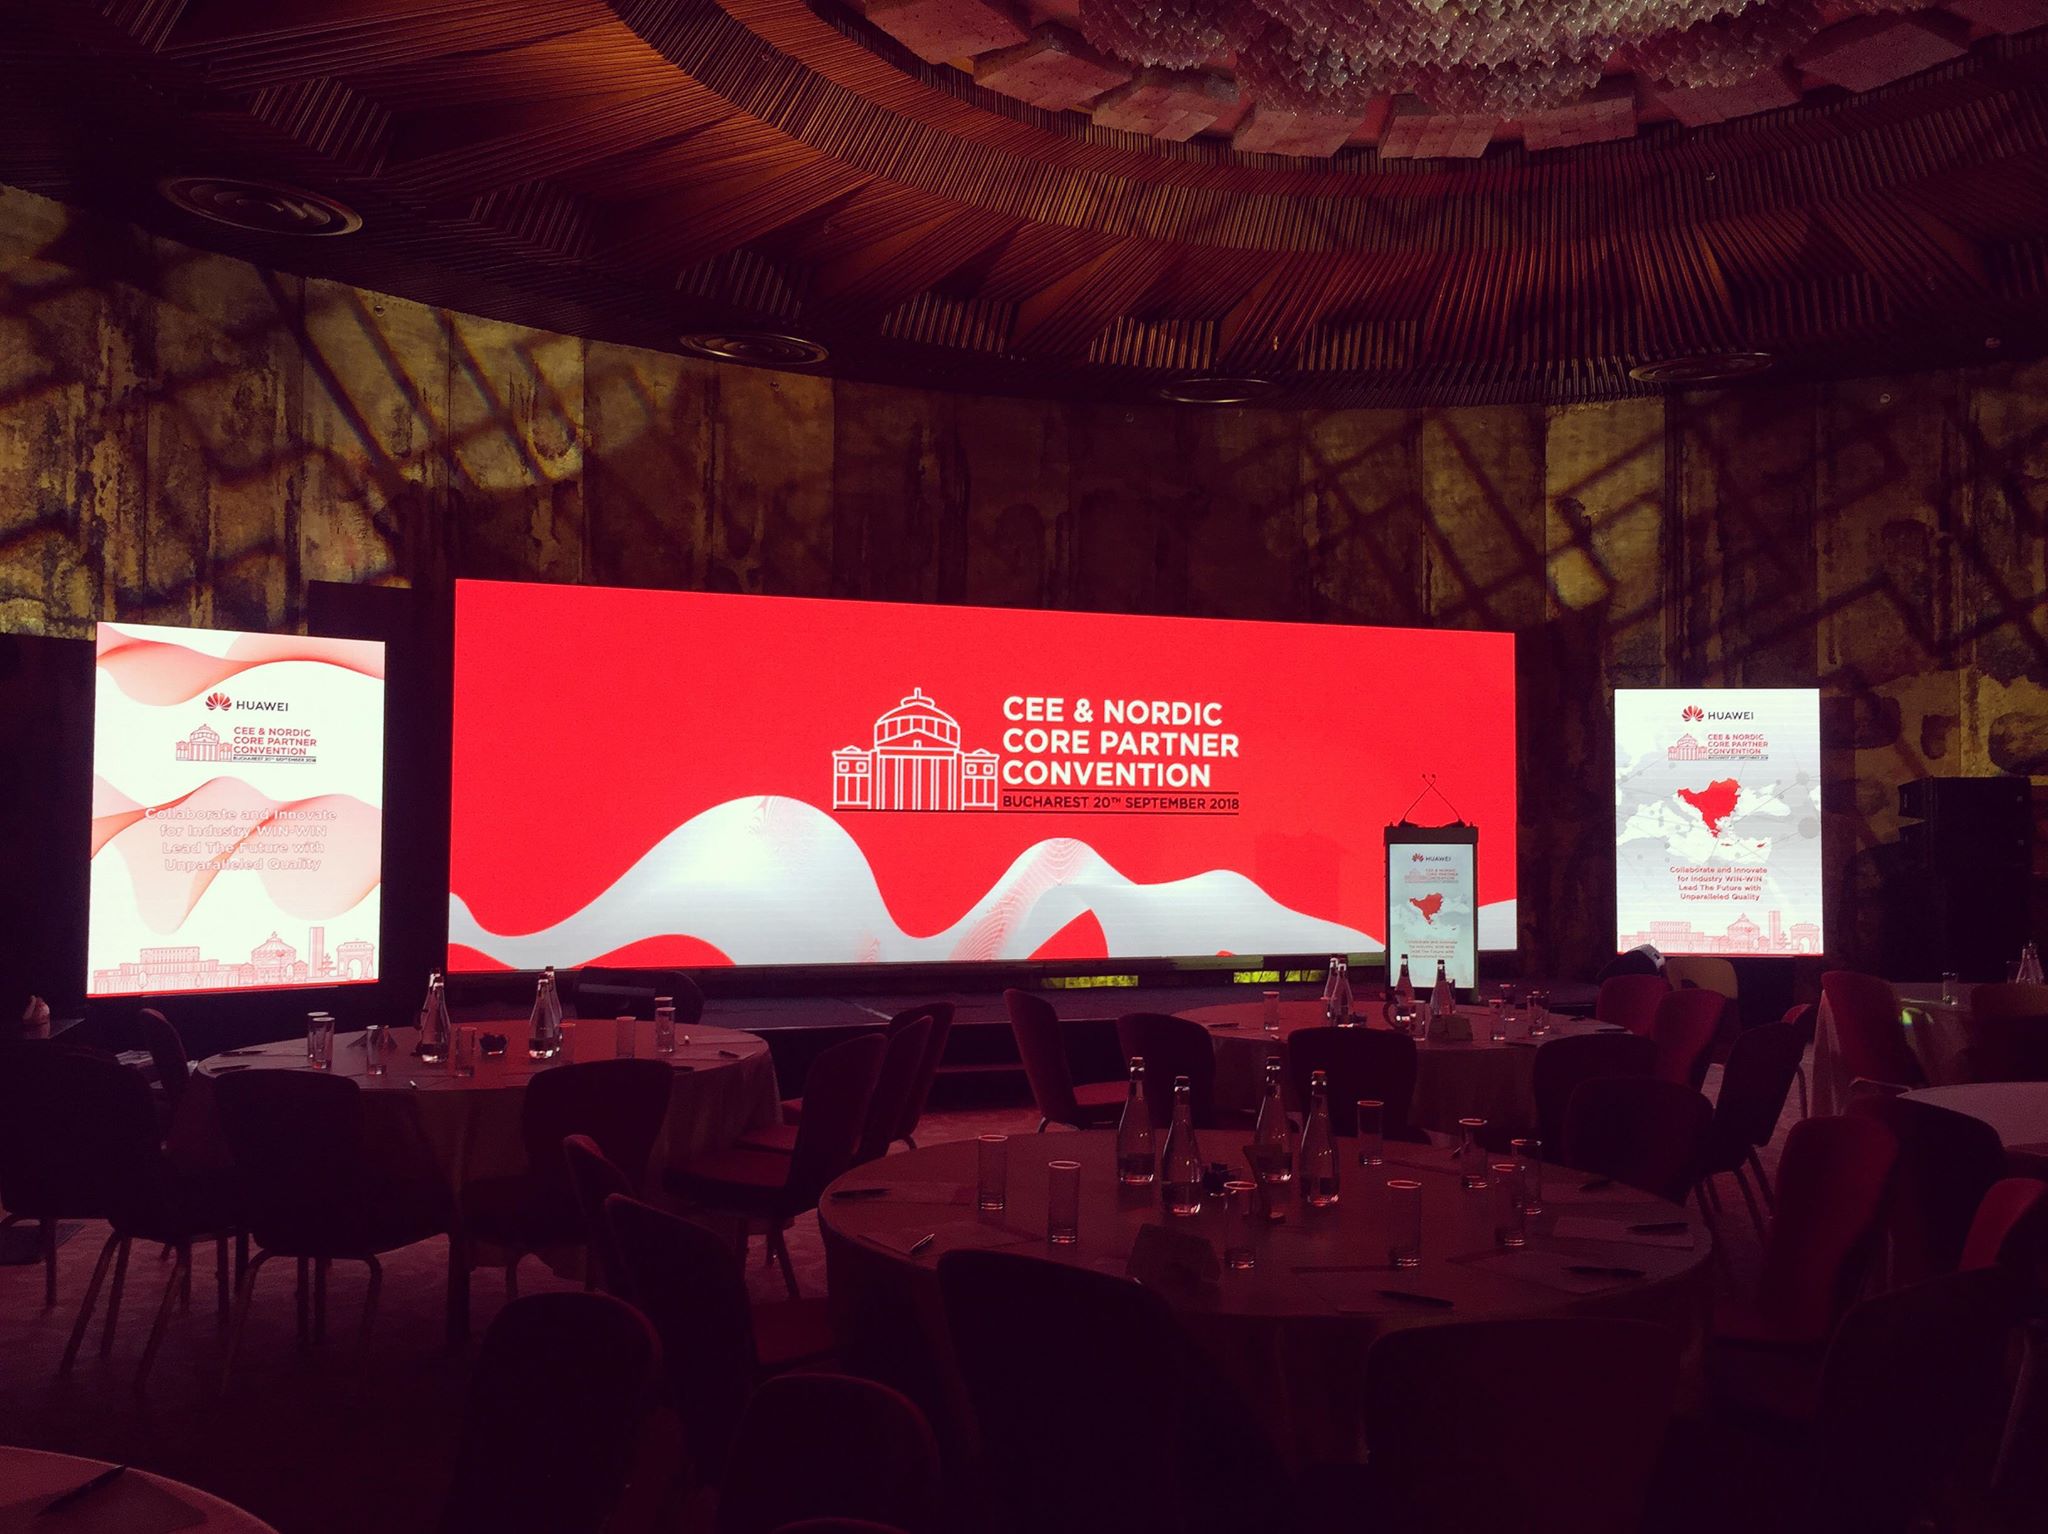 Conferinta Huawei 2018 @ Hotel Intercontinental Setup Scena Lumini Sunet Ecran Led